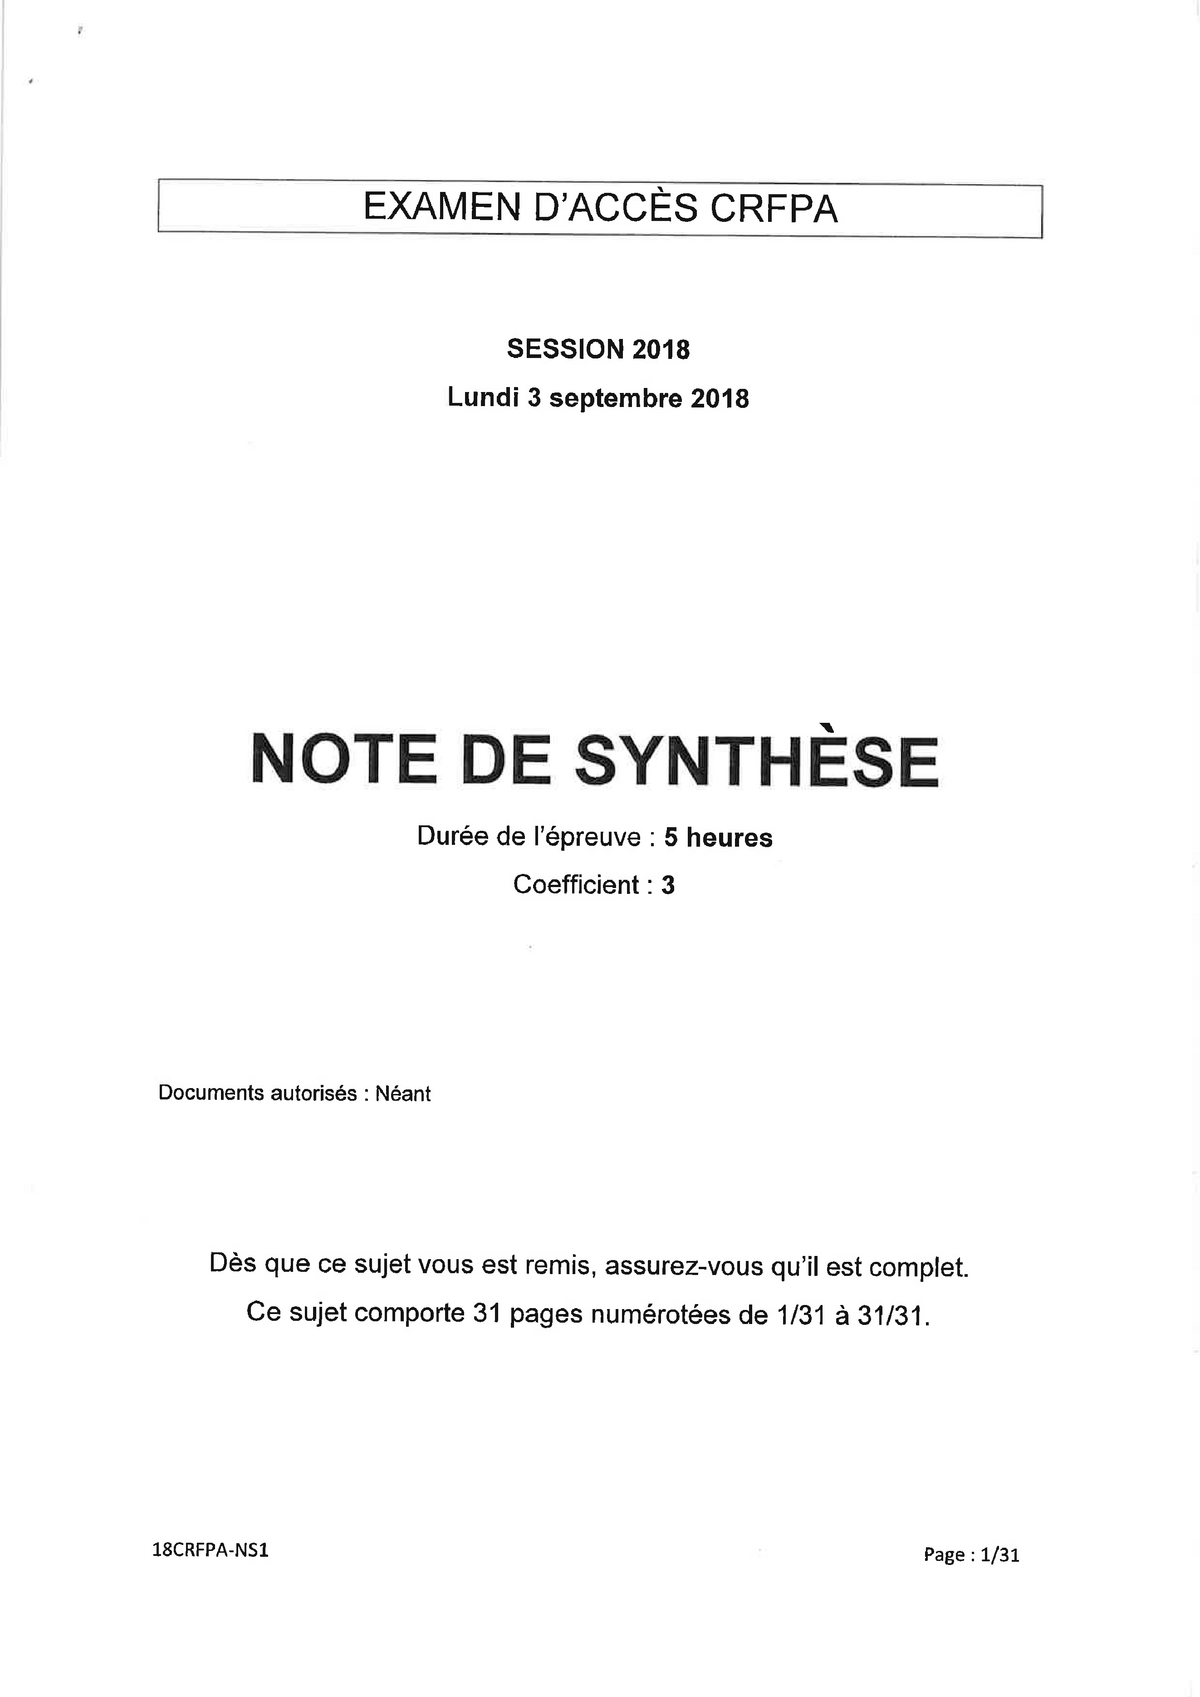 Note De Synthese Du Crfpa De L 2018 Examen D Acces Crfpa Sesston 2018 Lundi 3 Septembre Studocu